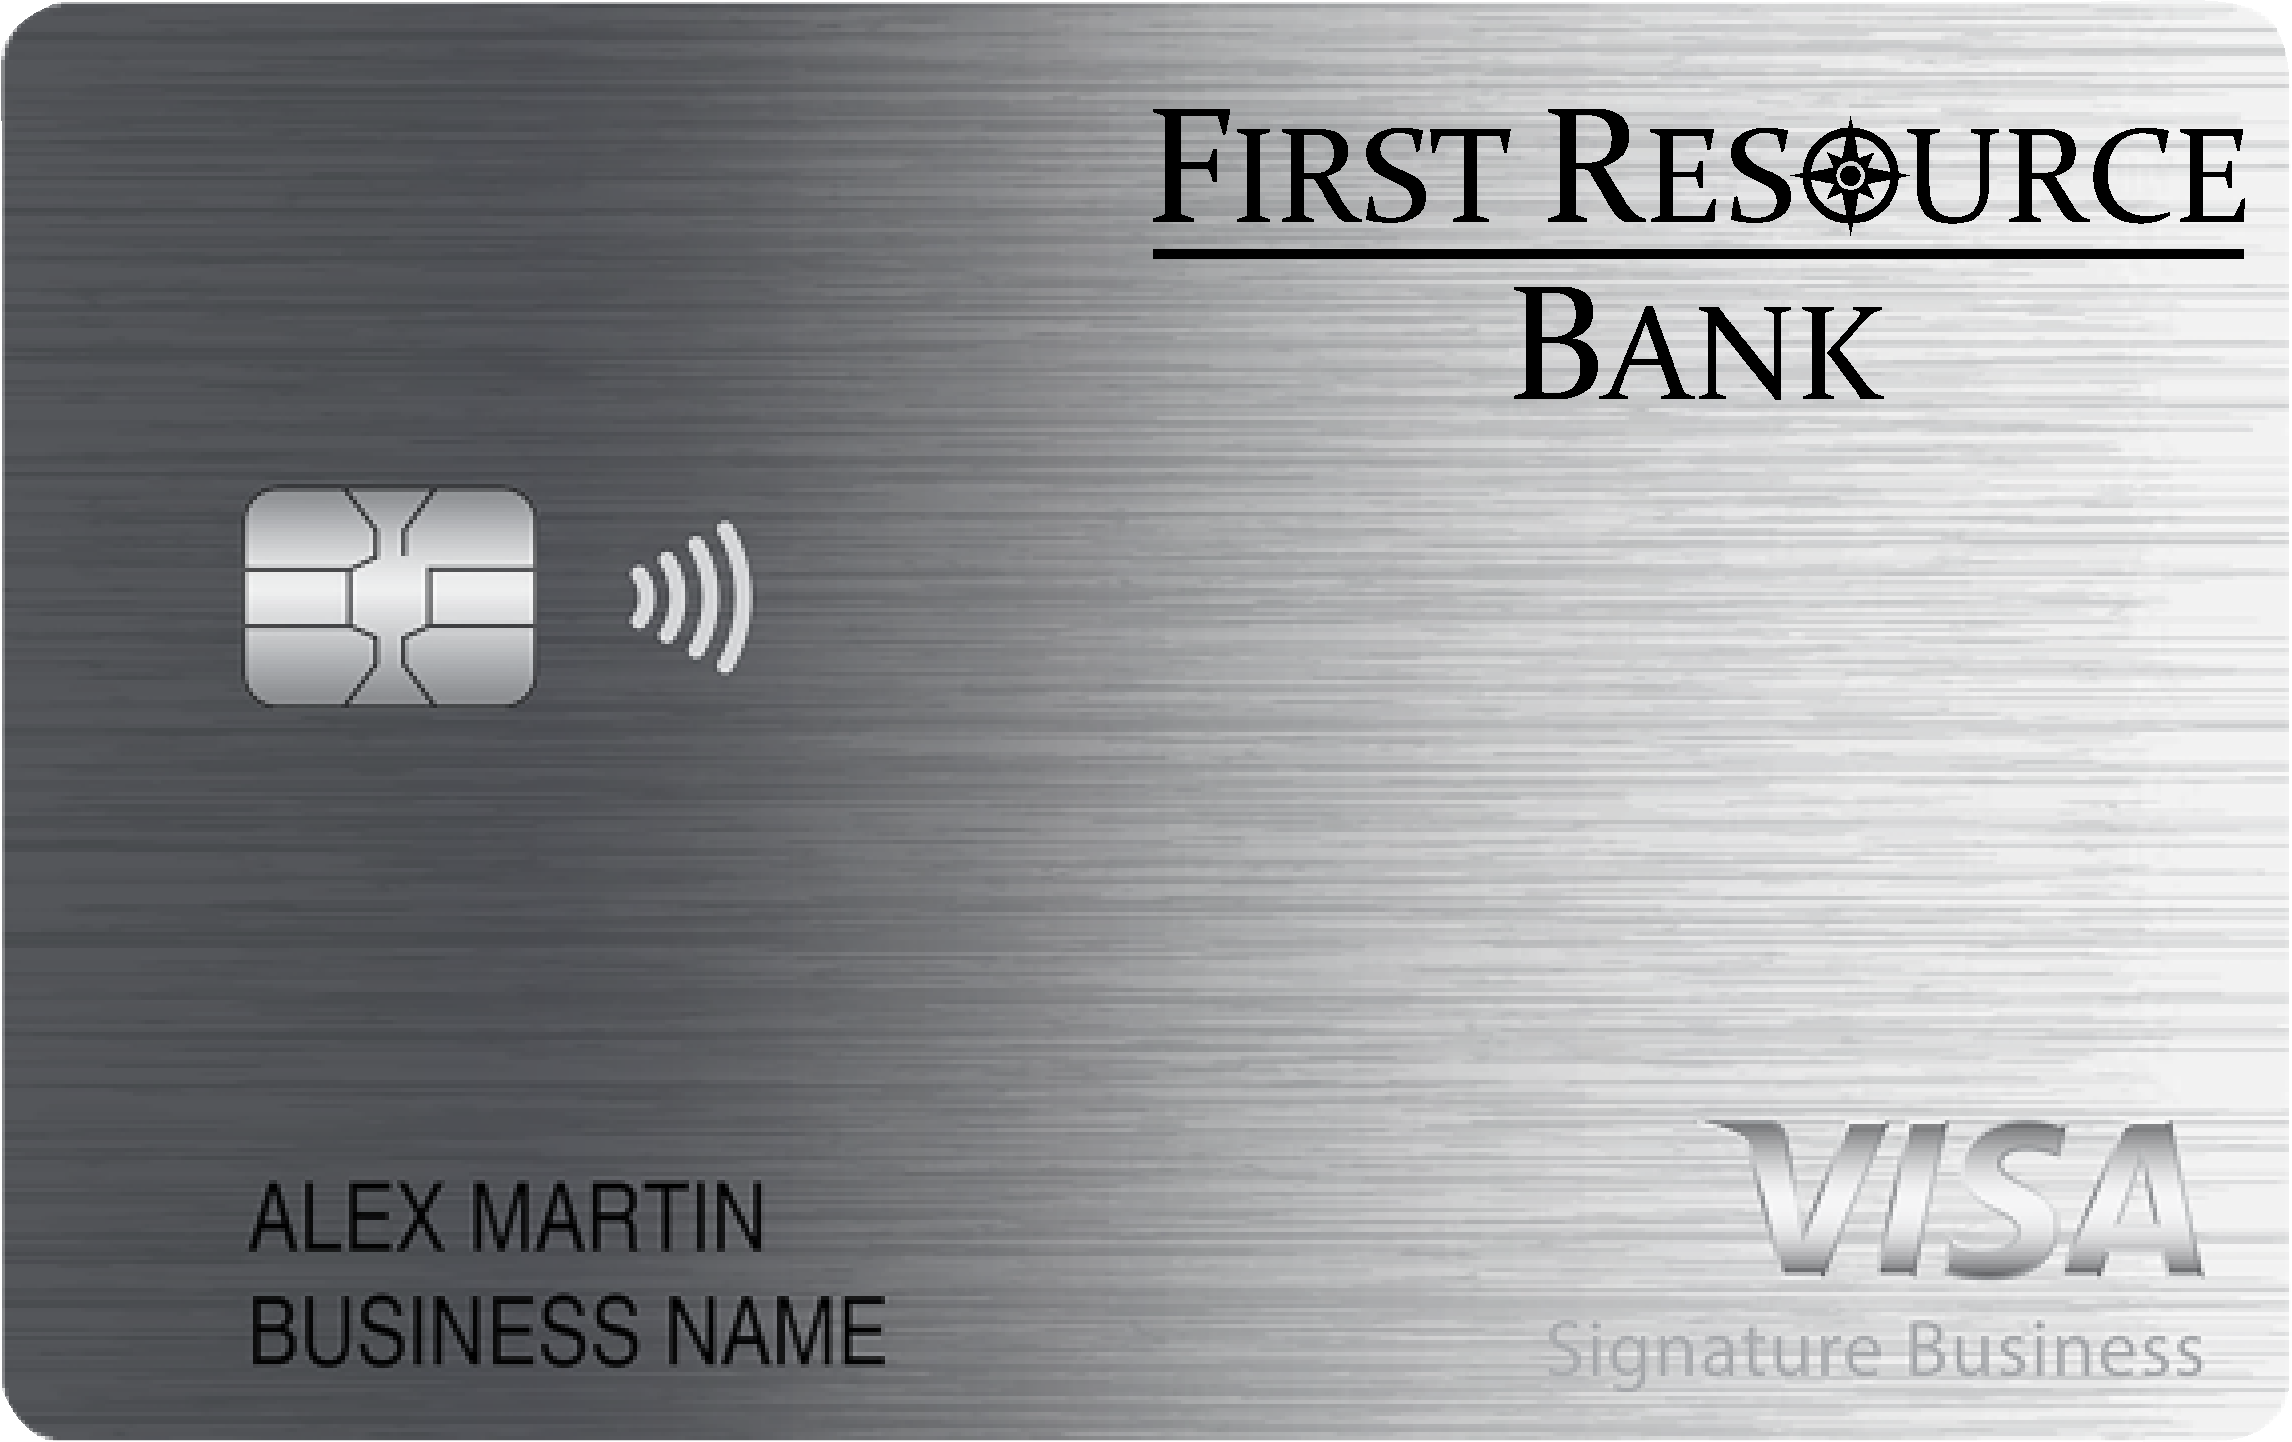 First Resource Bank Smart Business Rewards Card